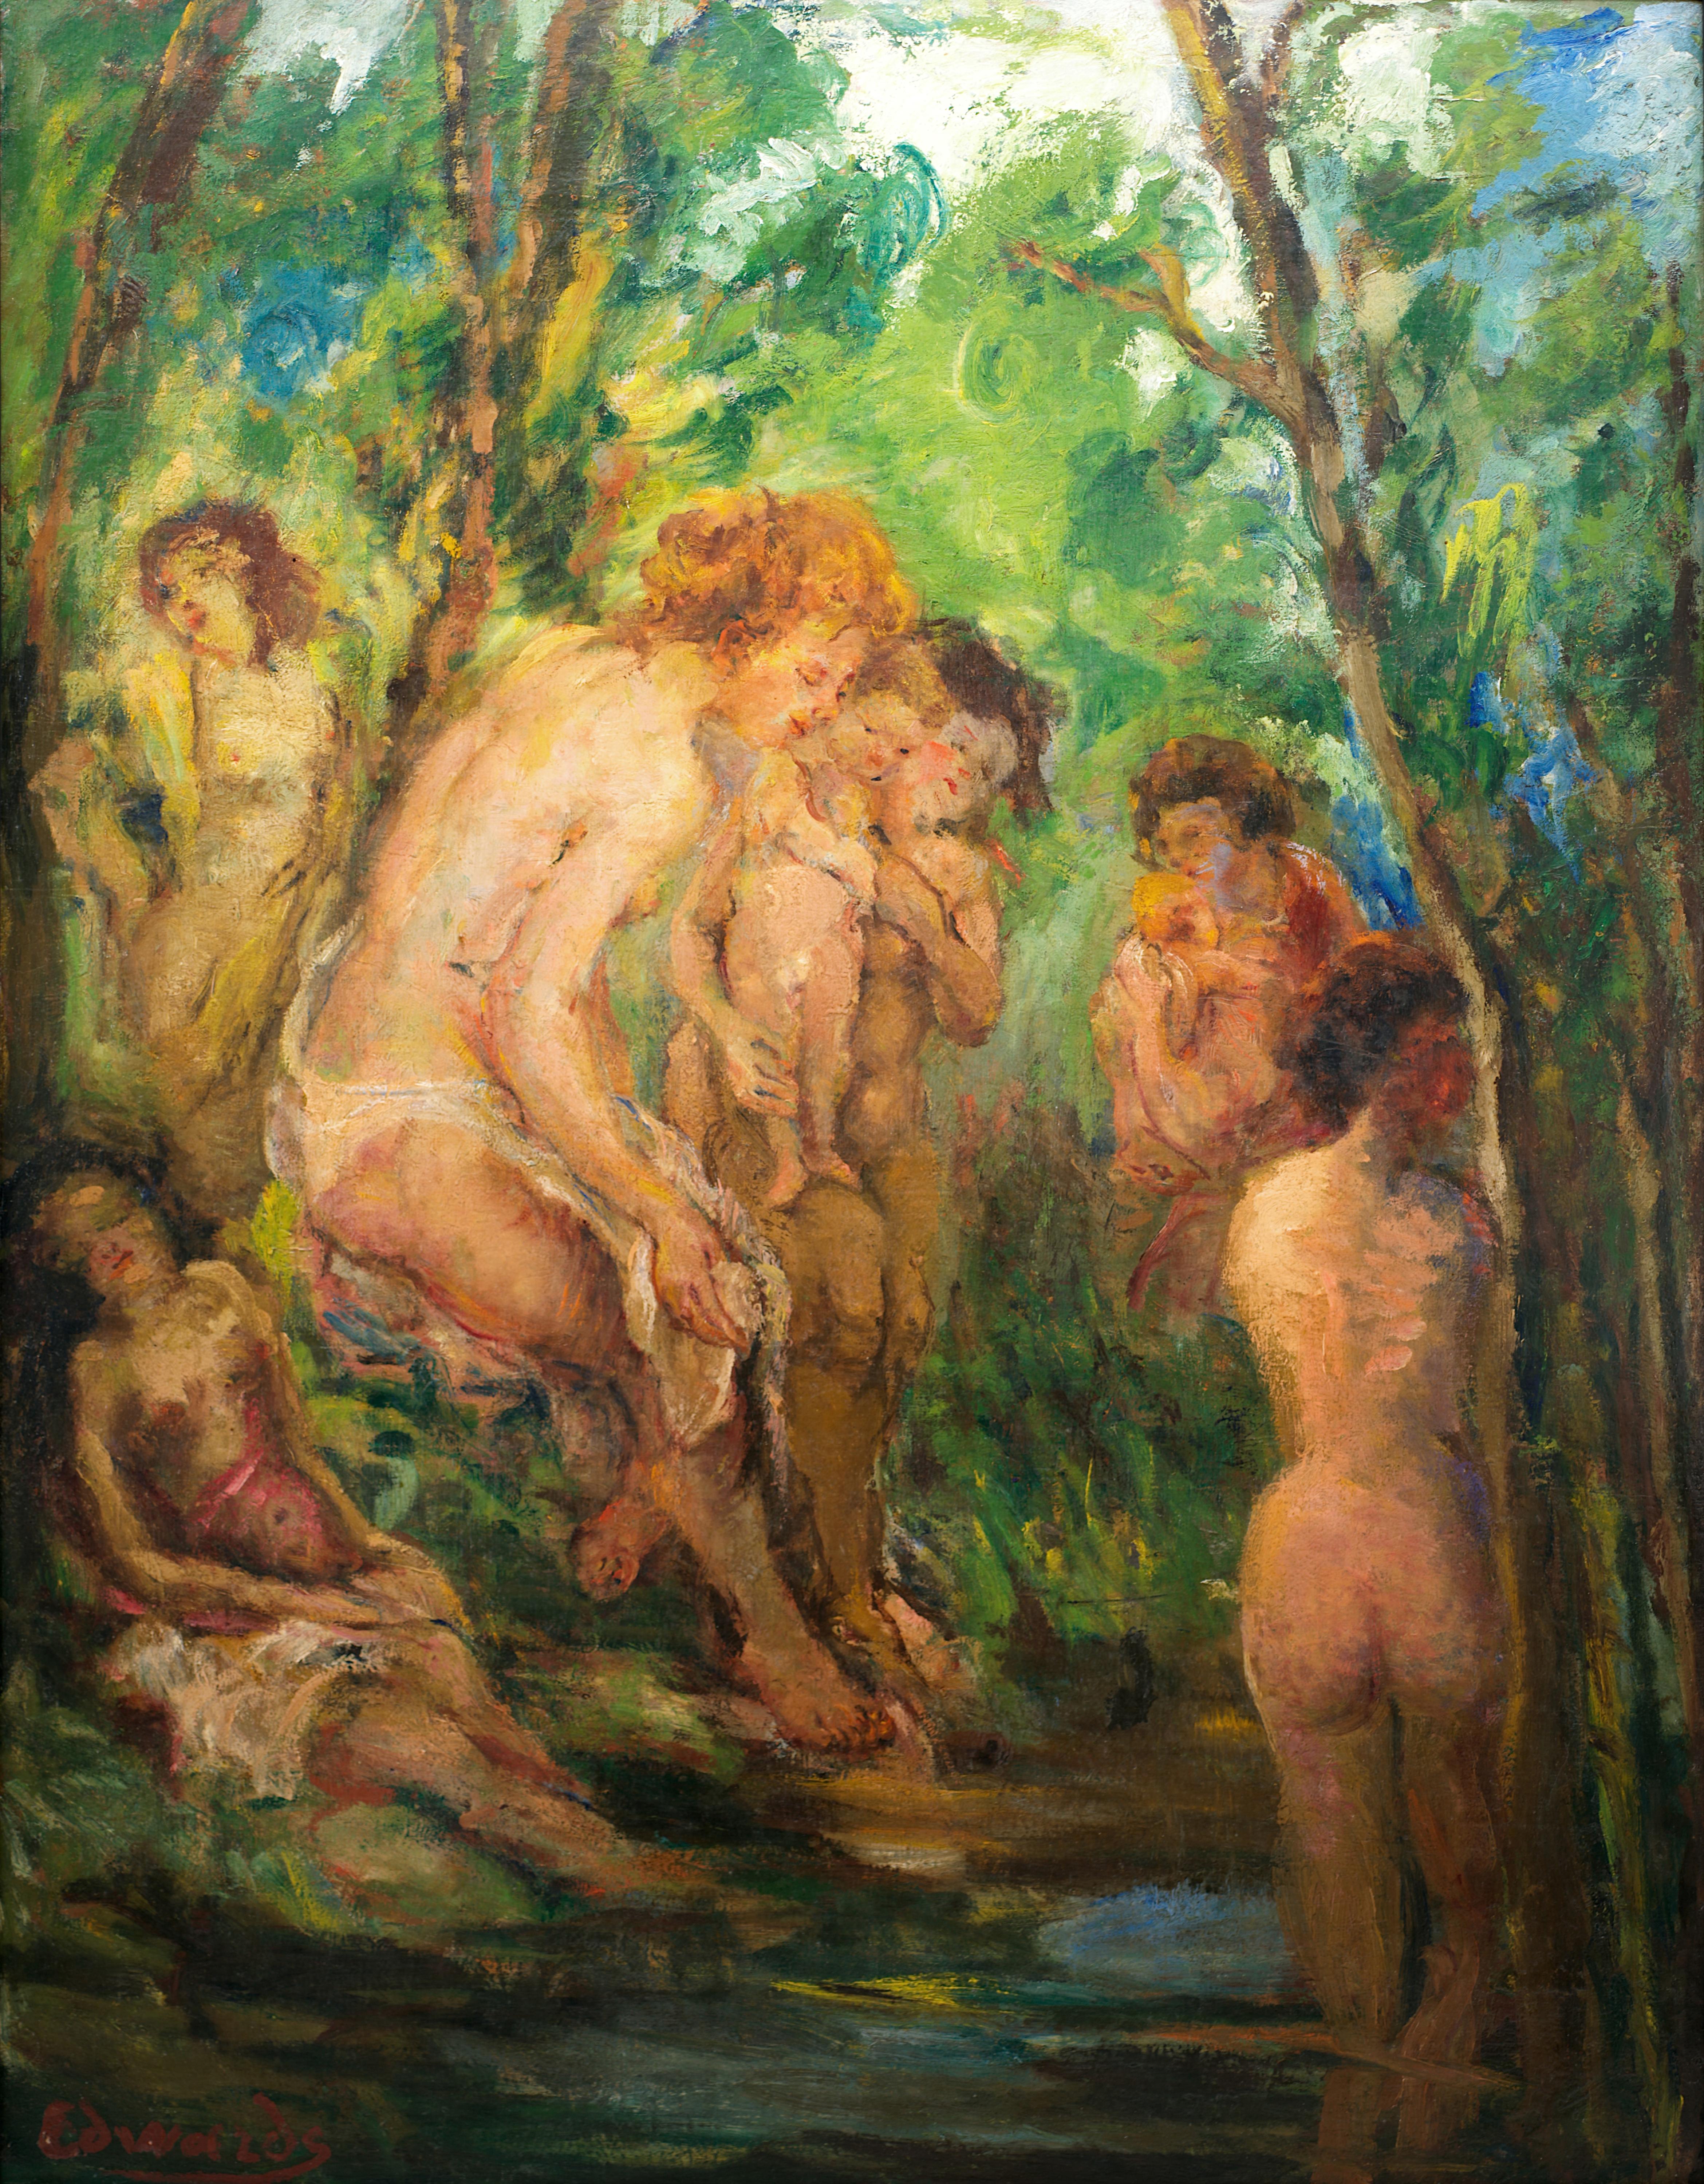 Fernande Horovitz-Edwards, Bathers, Large Oil on Canvas, 1930s For Sale 1